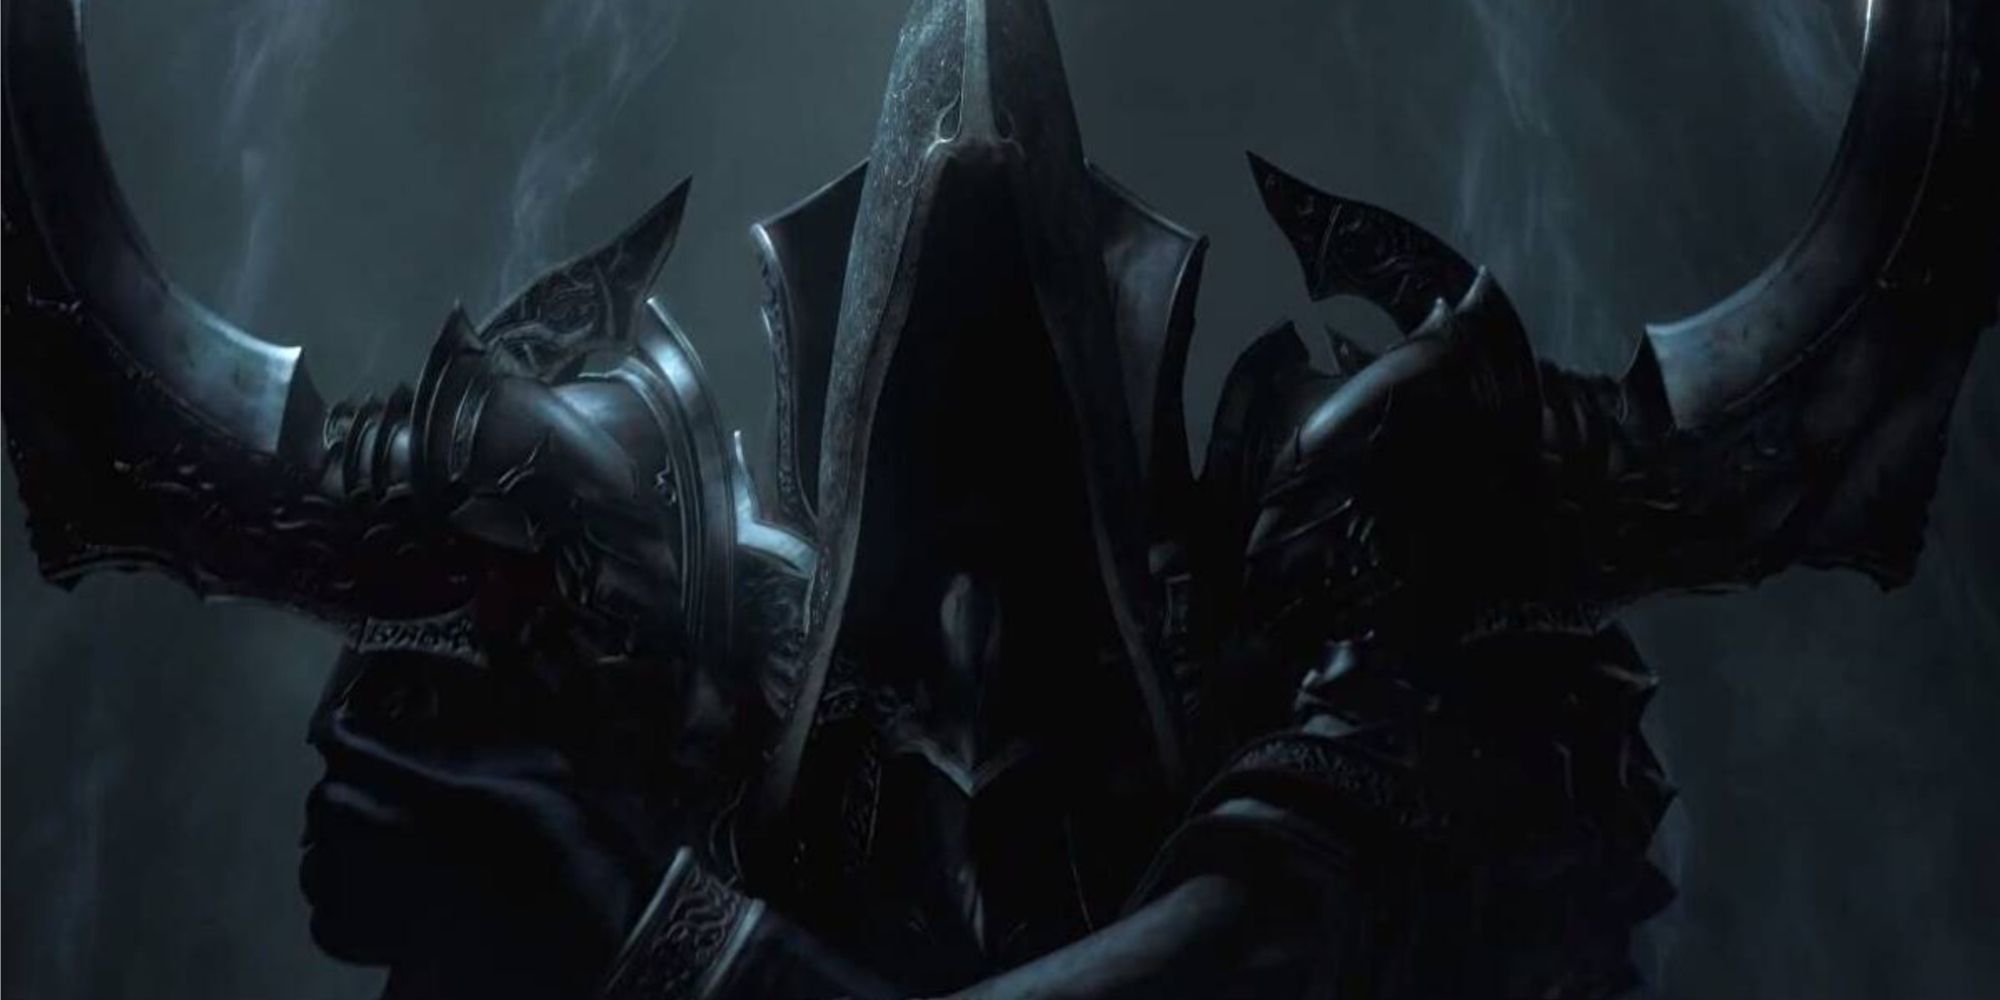 Diablo 3 Endgame Content was severely lacking until Reaper of Souls arrived